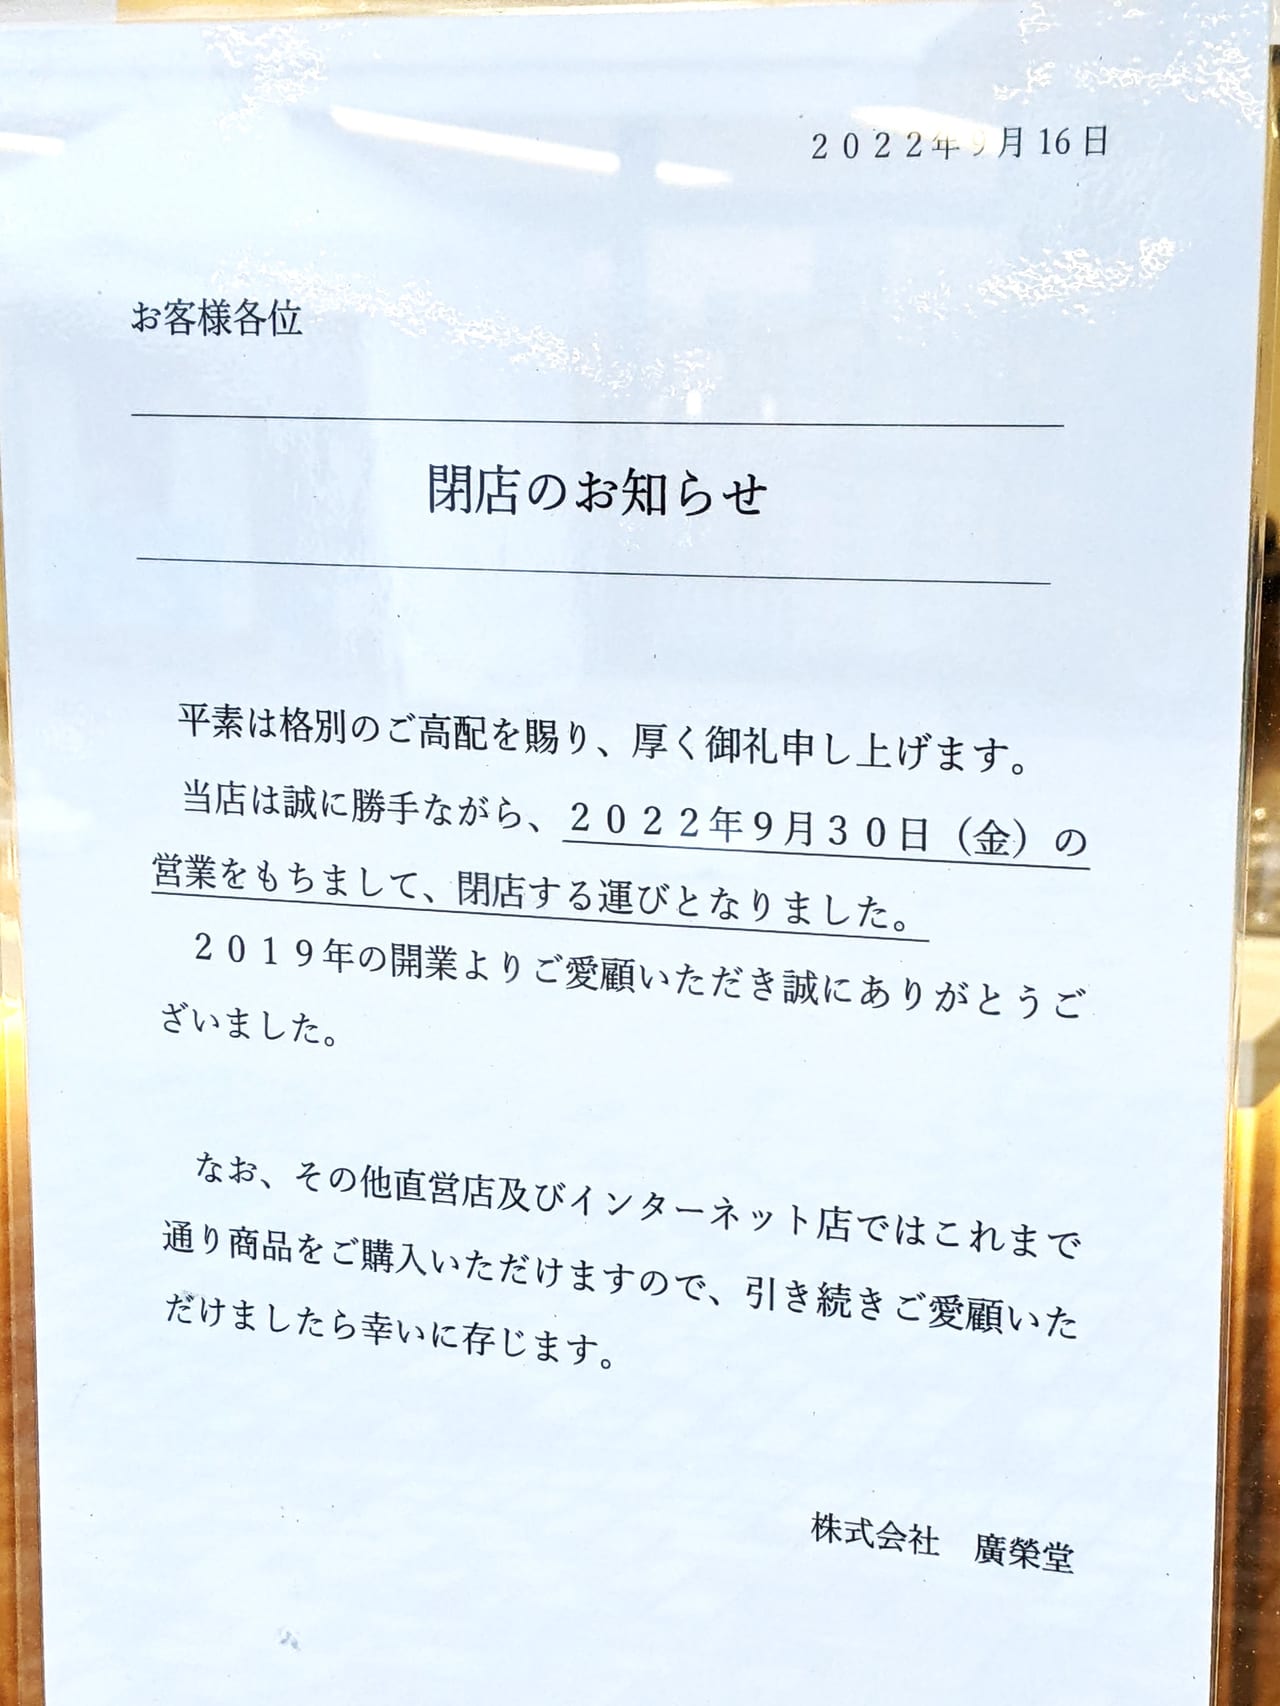 「CAFE Tokidoki KOEIDO」の閉店のお知らせ